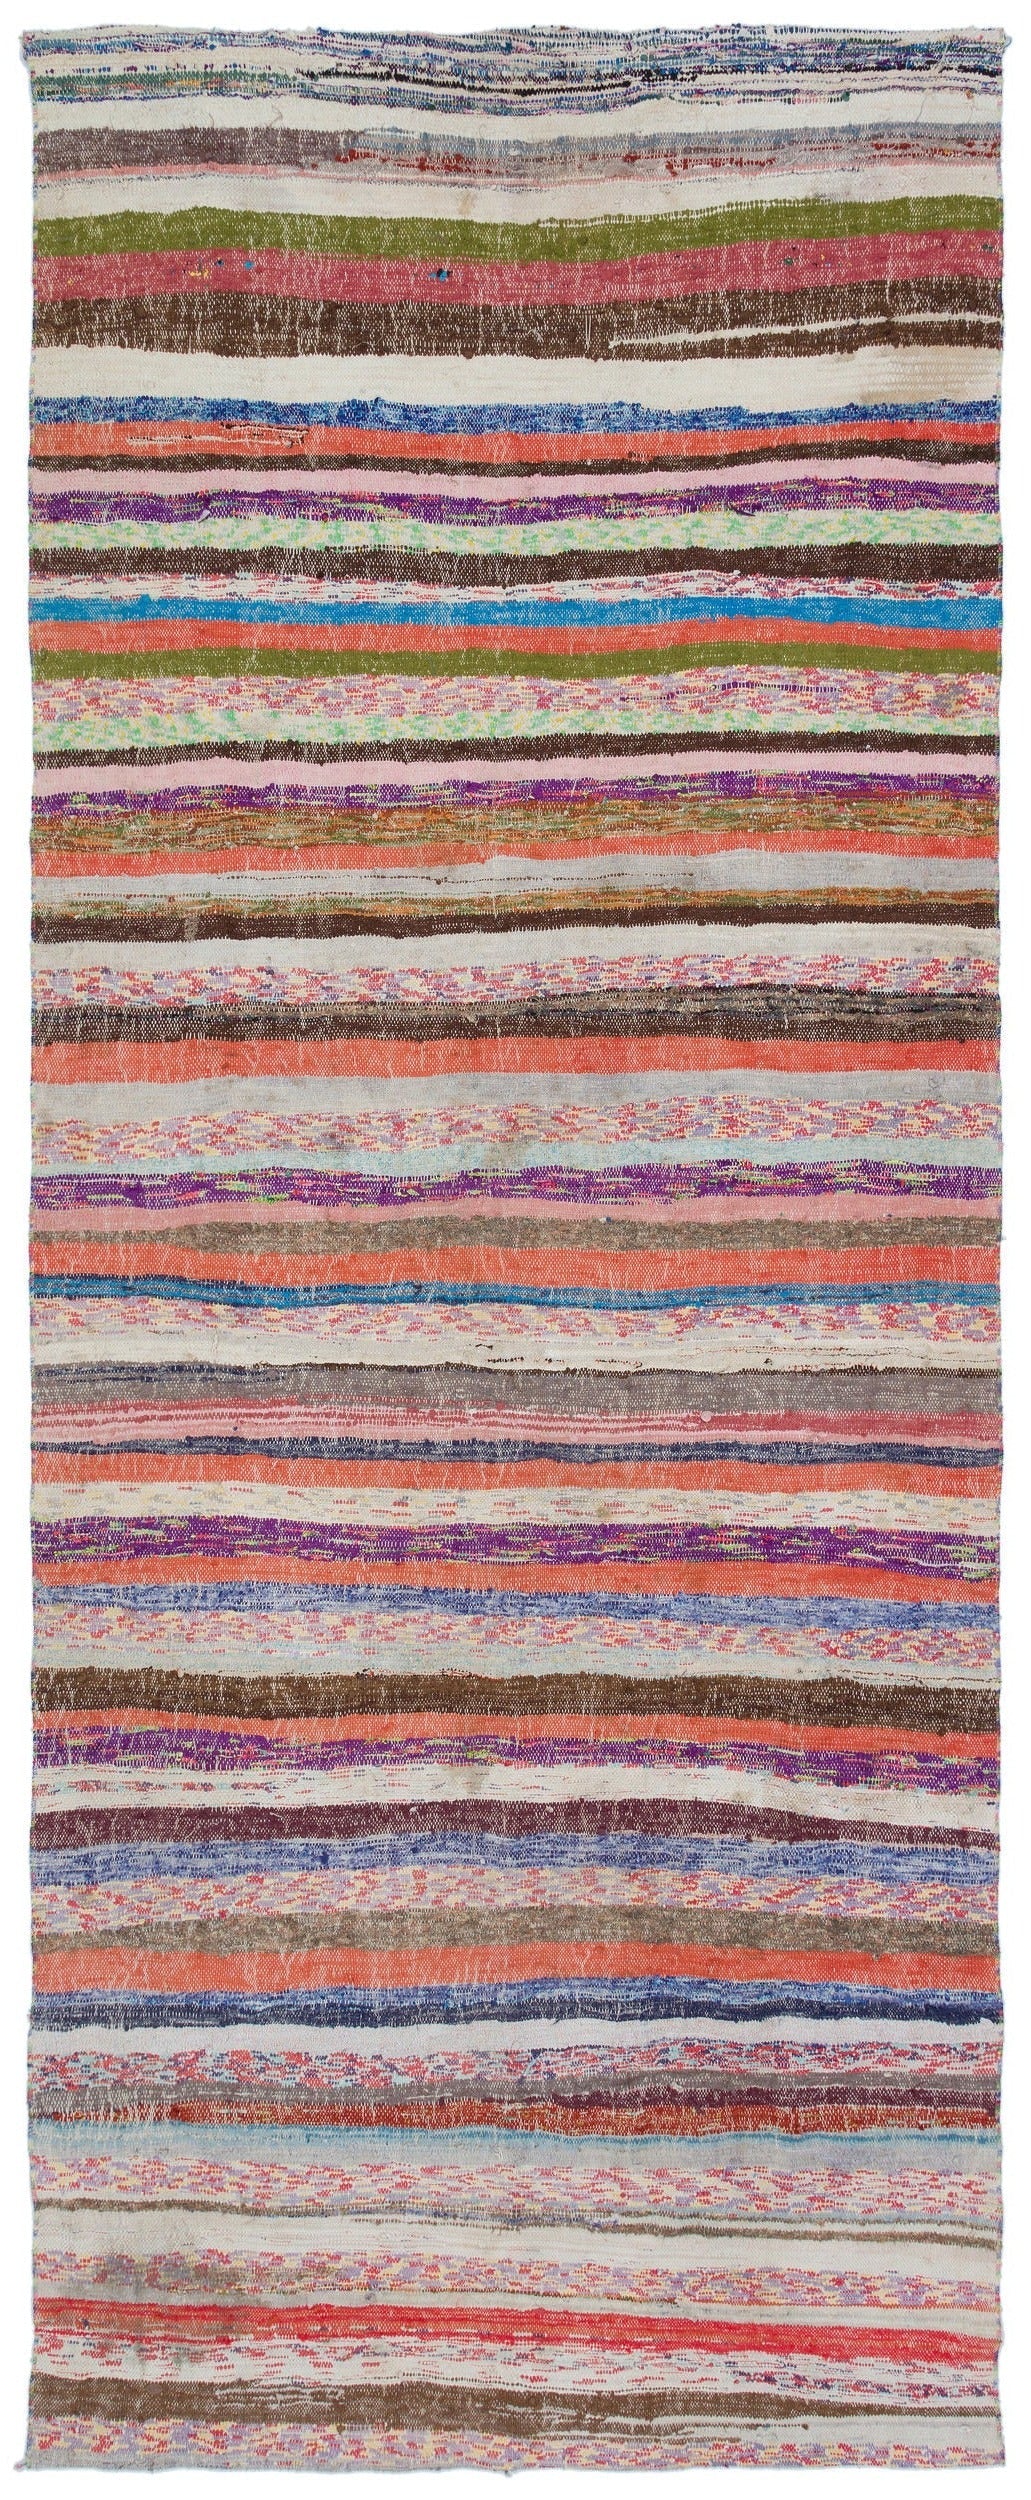 Cretan Beige Striped Wool Hand-Woven Carpet 143 x 354